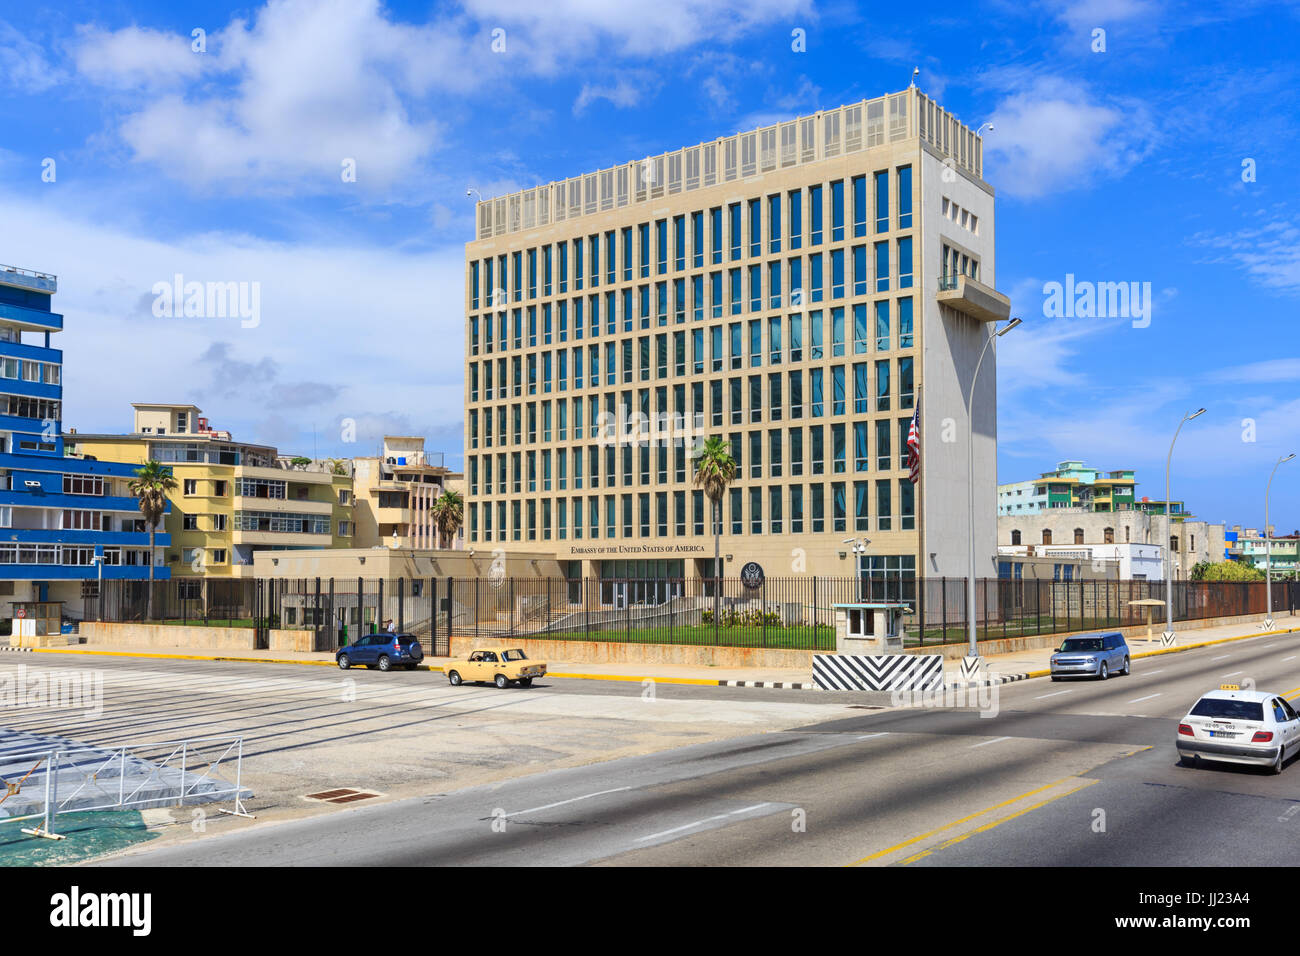 Ambasciata americana, Ambasciata degli Stati Uniti, Ambasciata degli Stati Uniti d'America, in Vedado, Havana, La Habana, Cuba Foto Stock